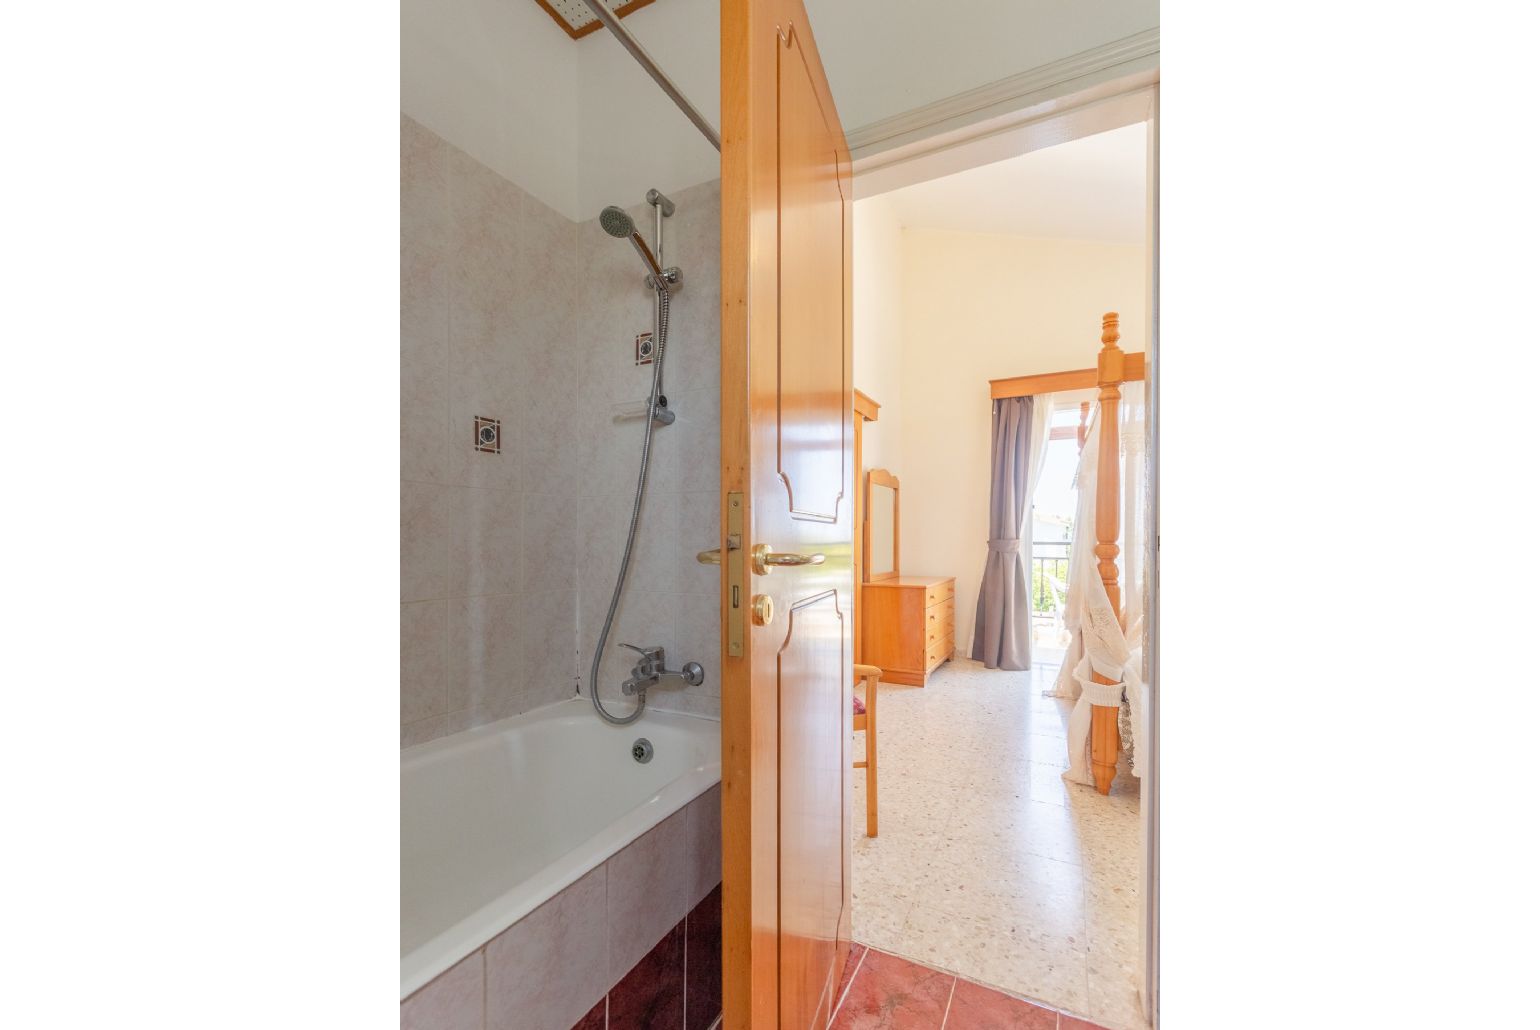 En suite bathroom with bath and overhead shower